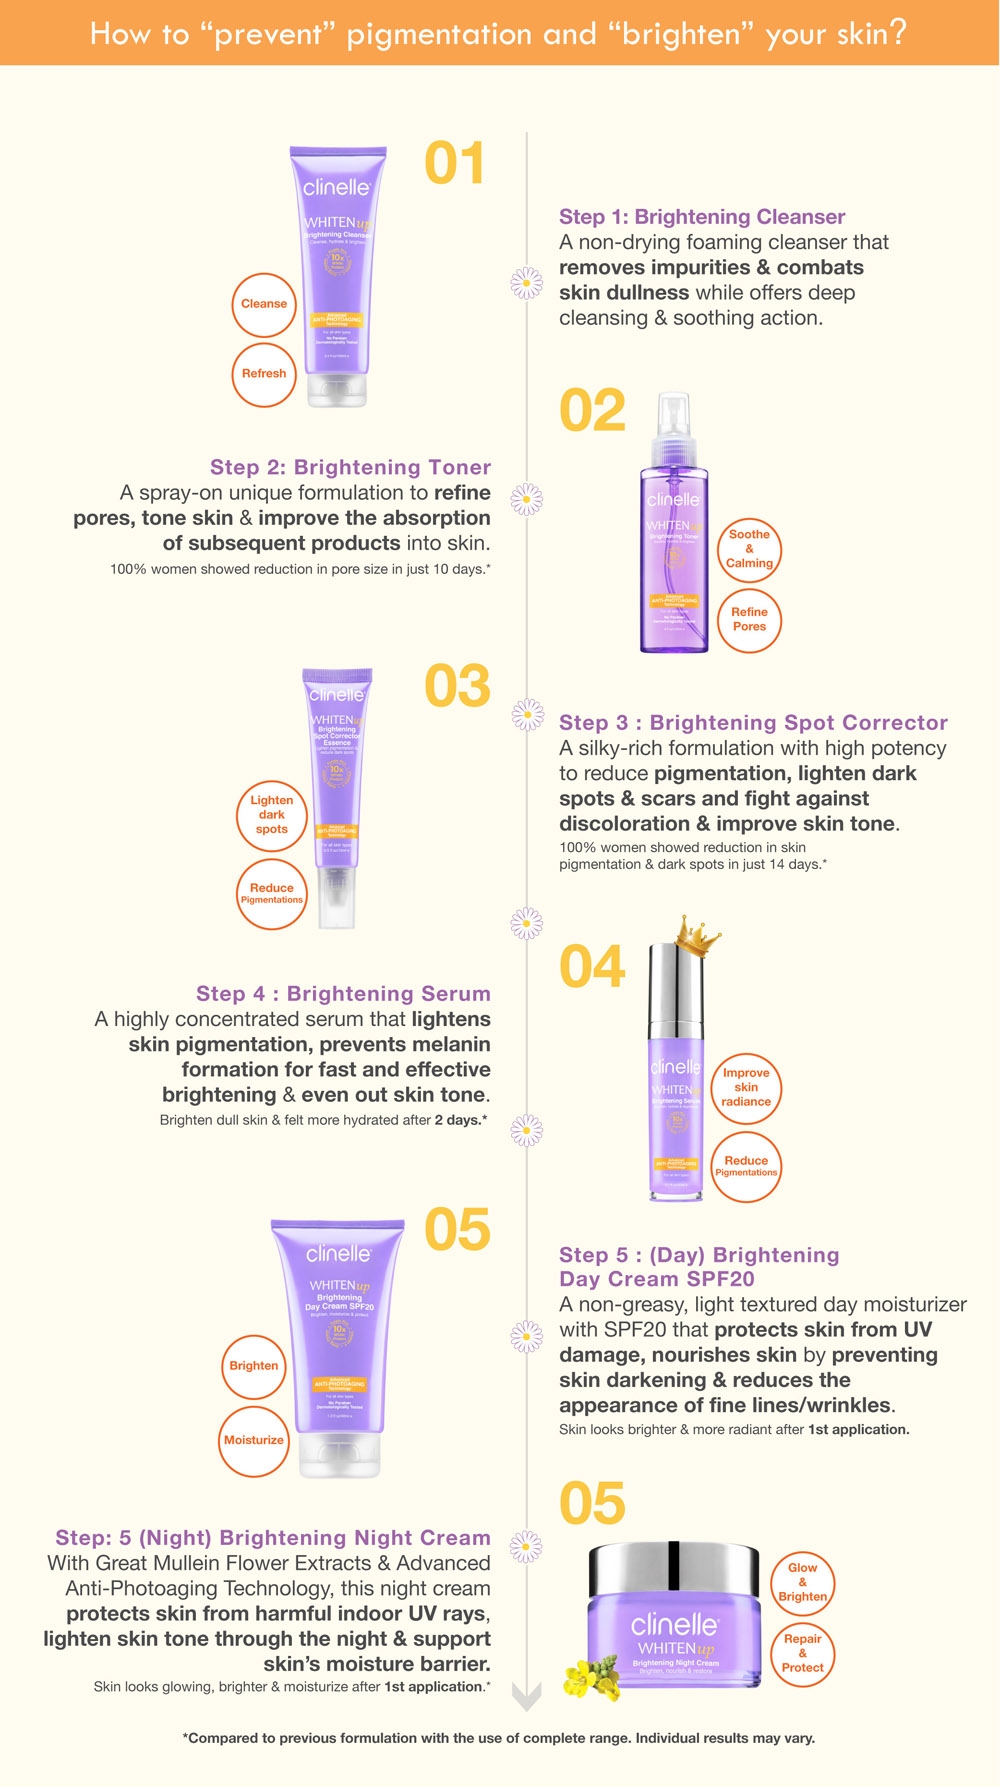 How to Prevent Pigmentation & Brighten Your Skin